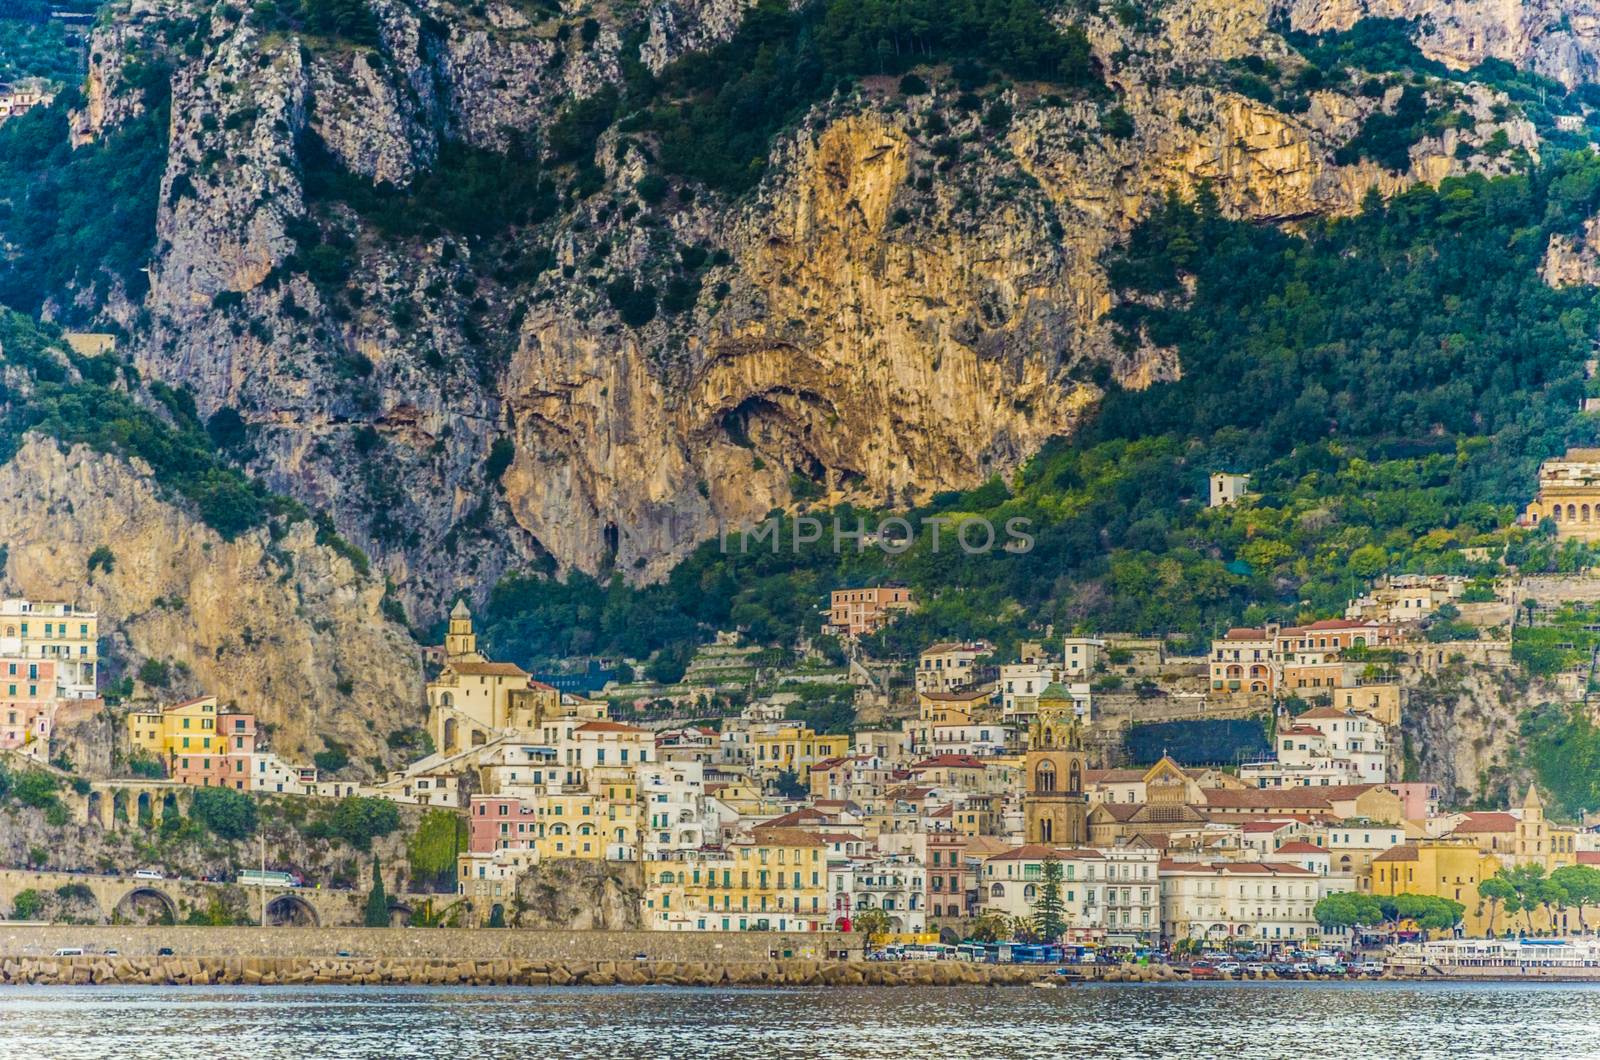 View from the sea of an Italian village on the Amalfi Coast, Positano.